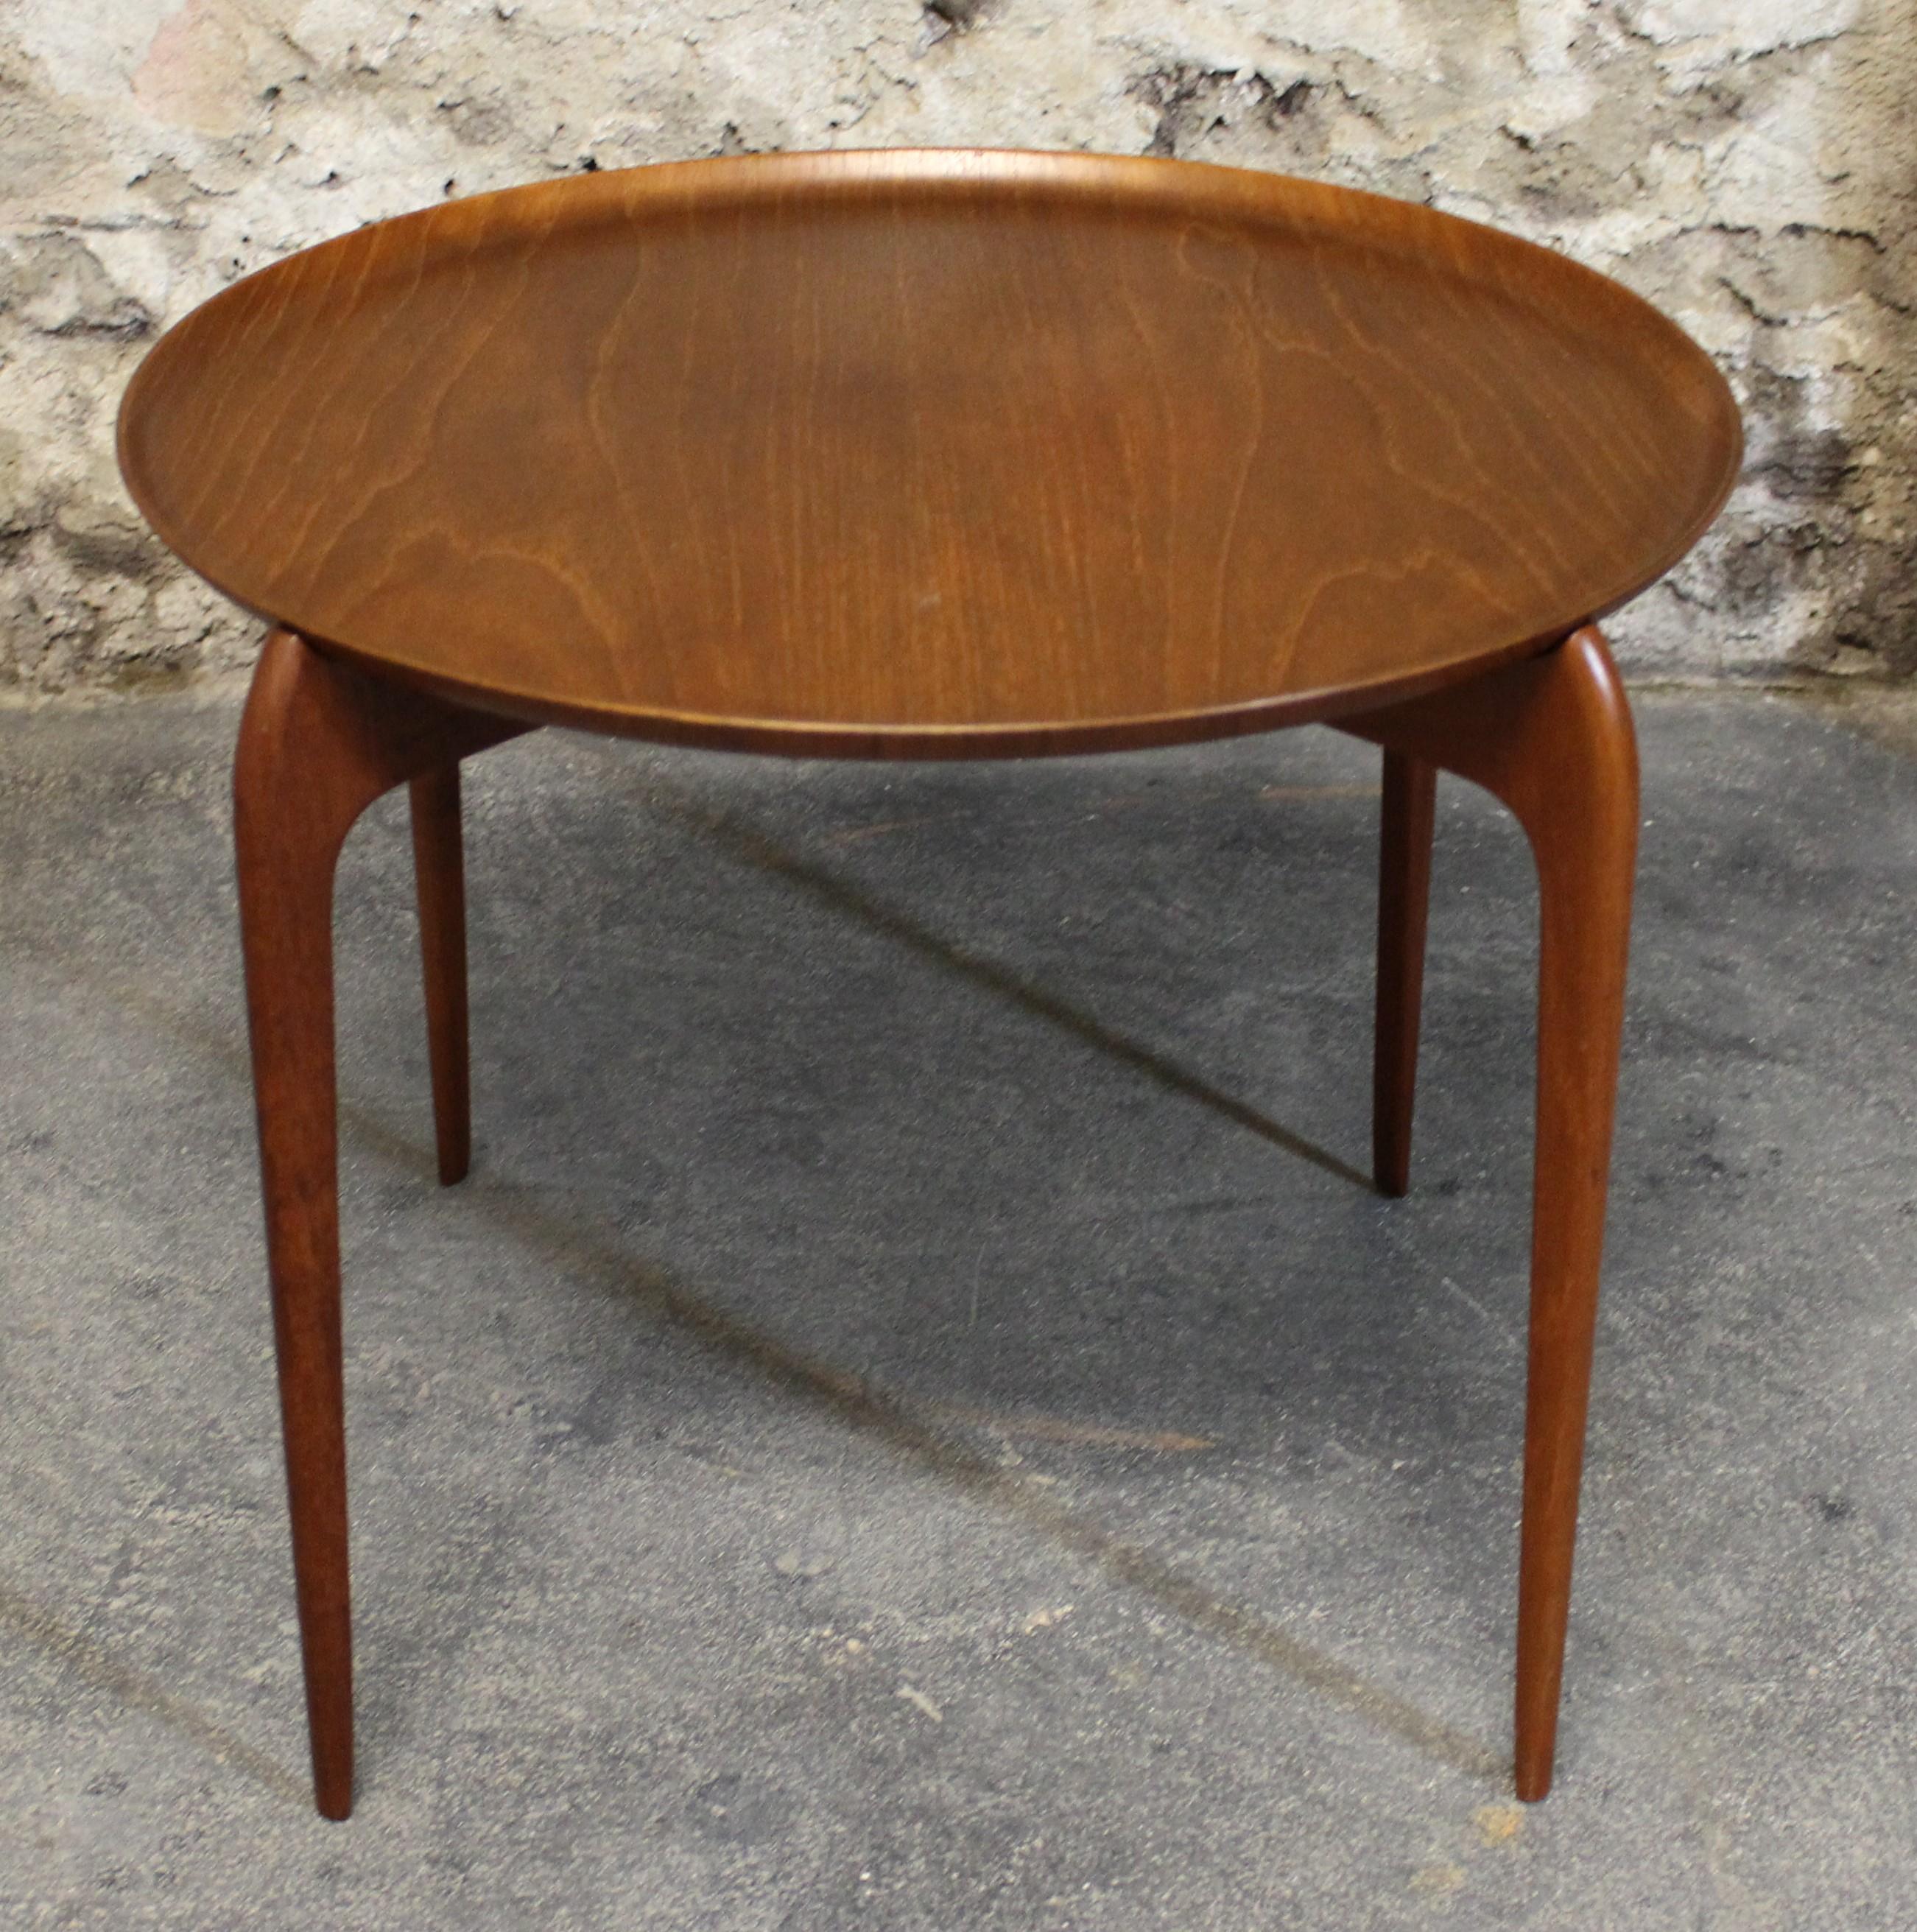 Danish teak removable tray top side table designed by Willumsen & Engholm

Scandinavian Modern / Mid-Century Modern.